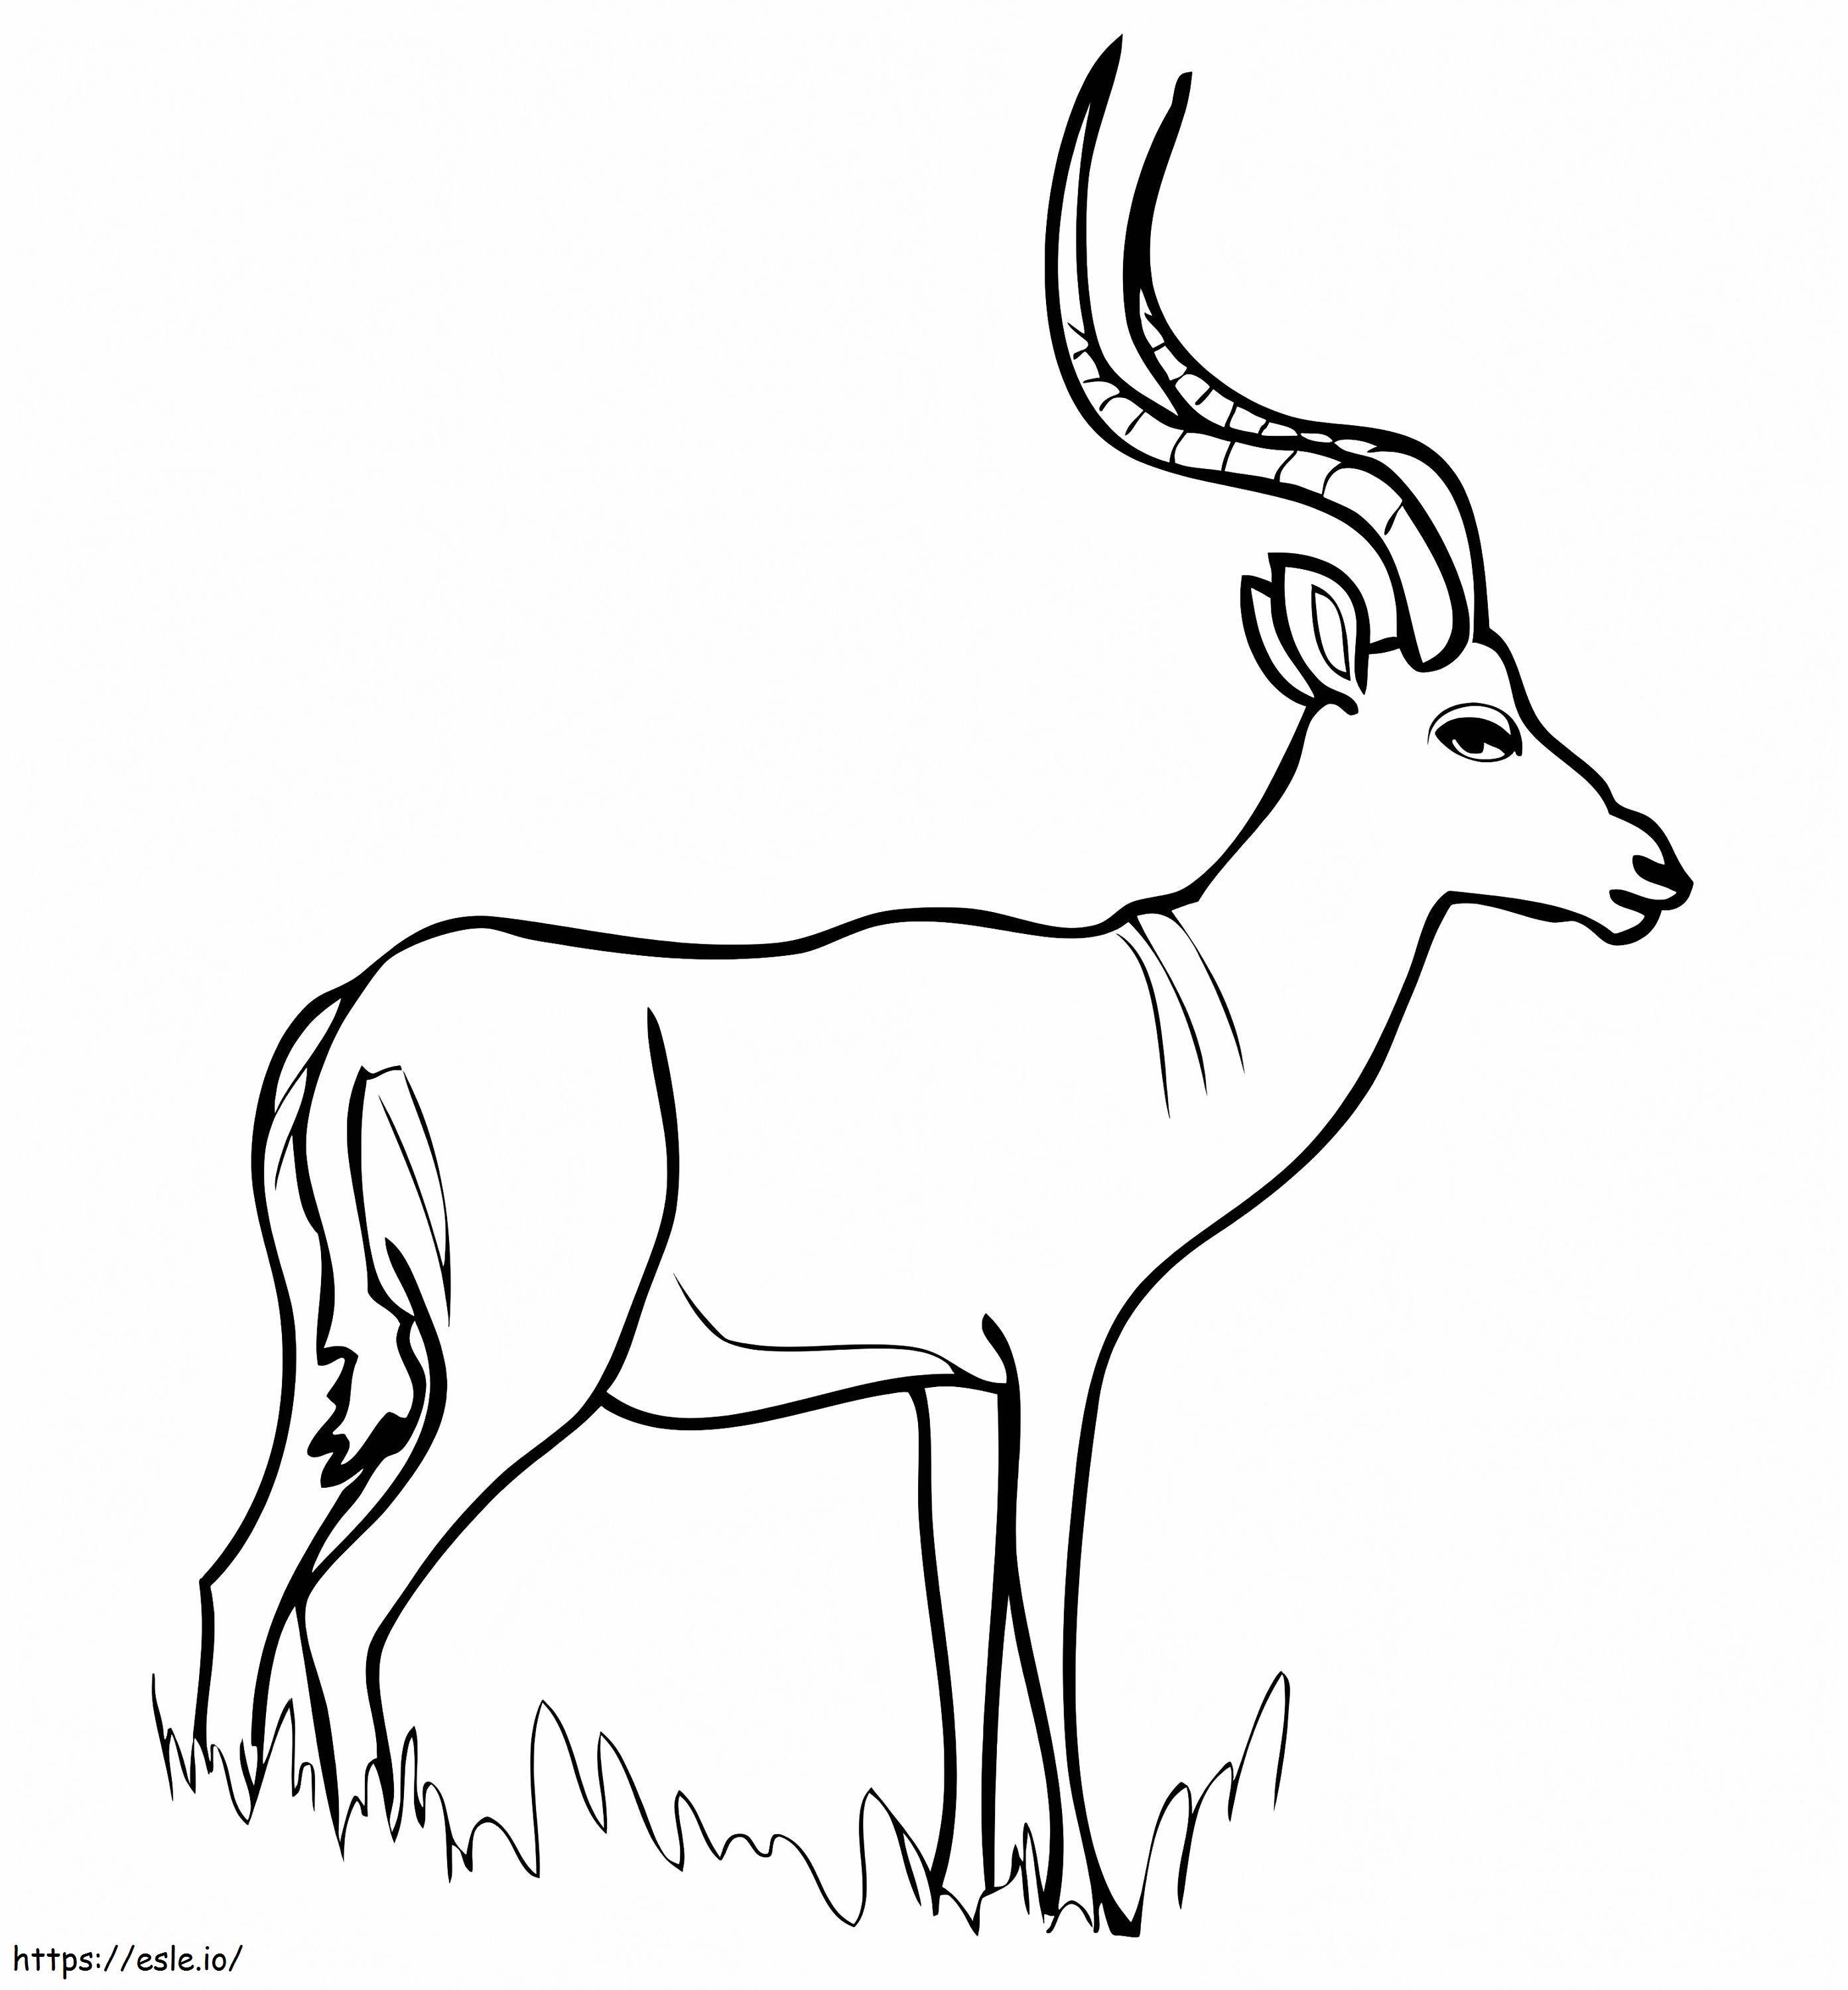 Impala antílope africano para colorear